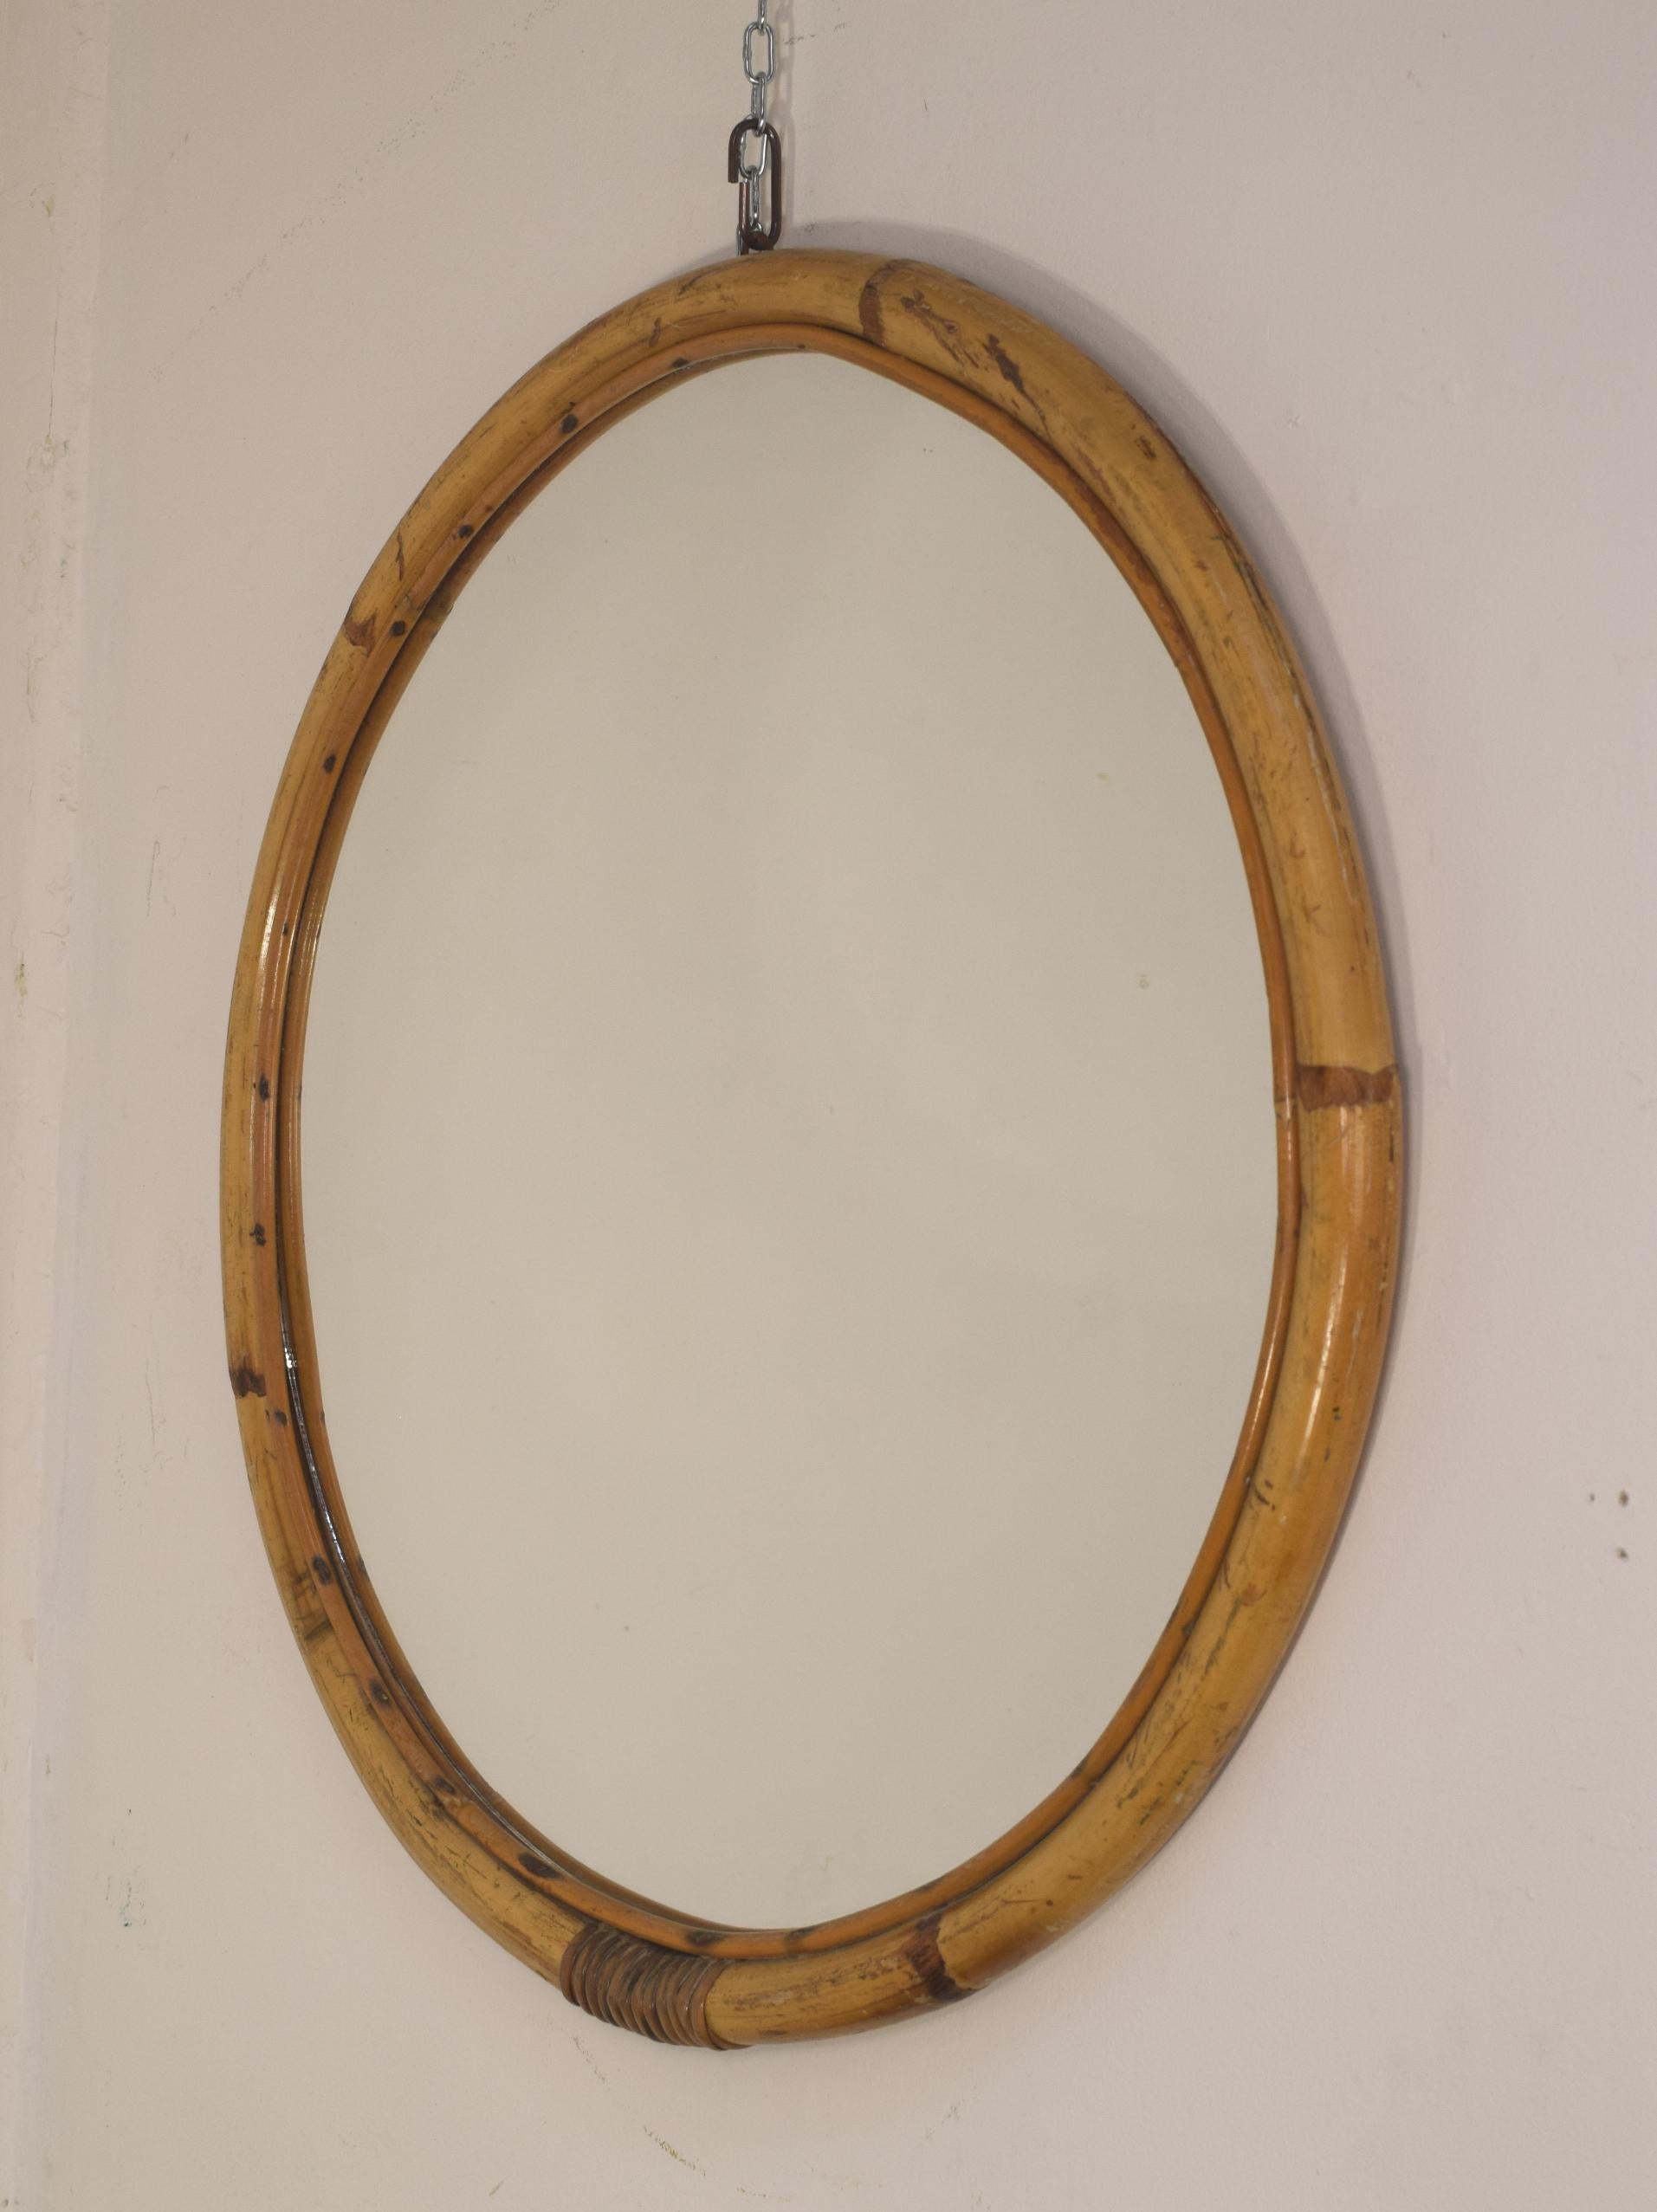 Italian round bamboo mirror, 1960s.
Dimensions: H= 3 cm; D= 60 cm.